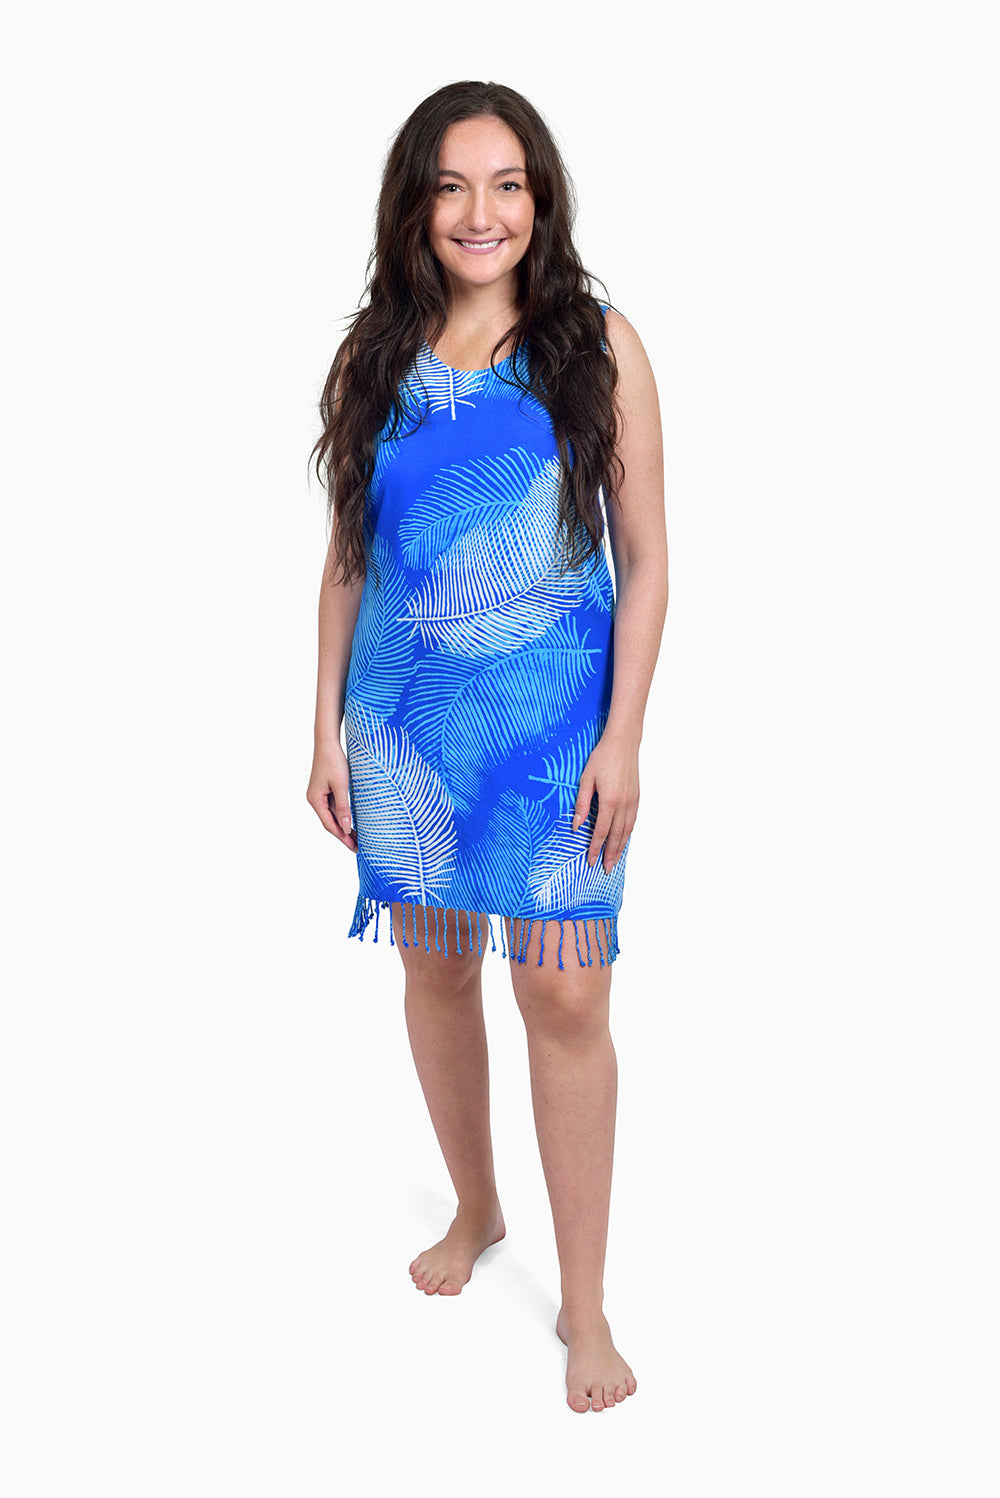 Blue & White (Sky) -  Handmade Batik Tank Frill Dress - Palm Design